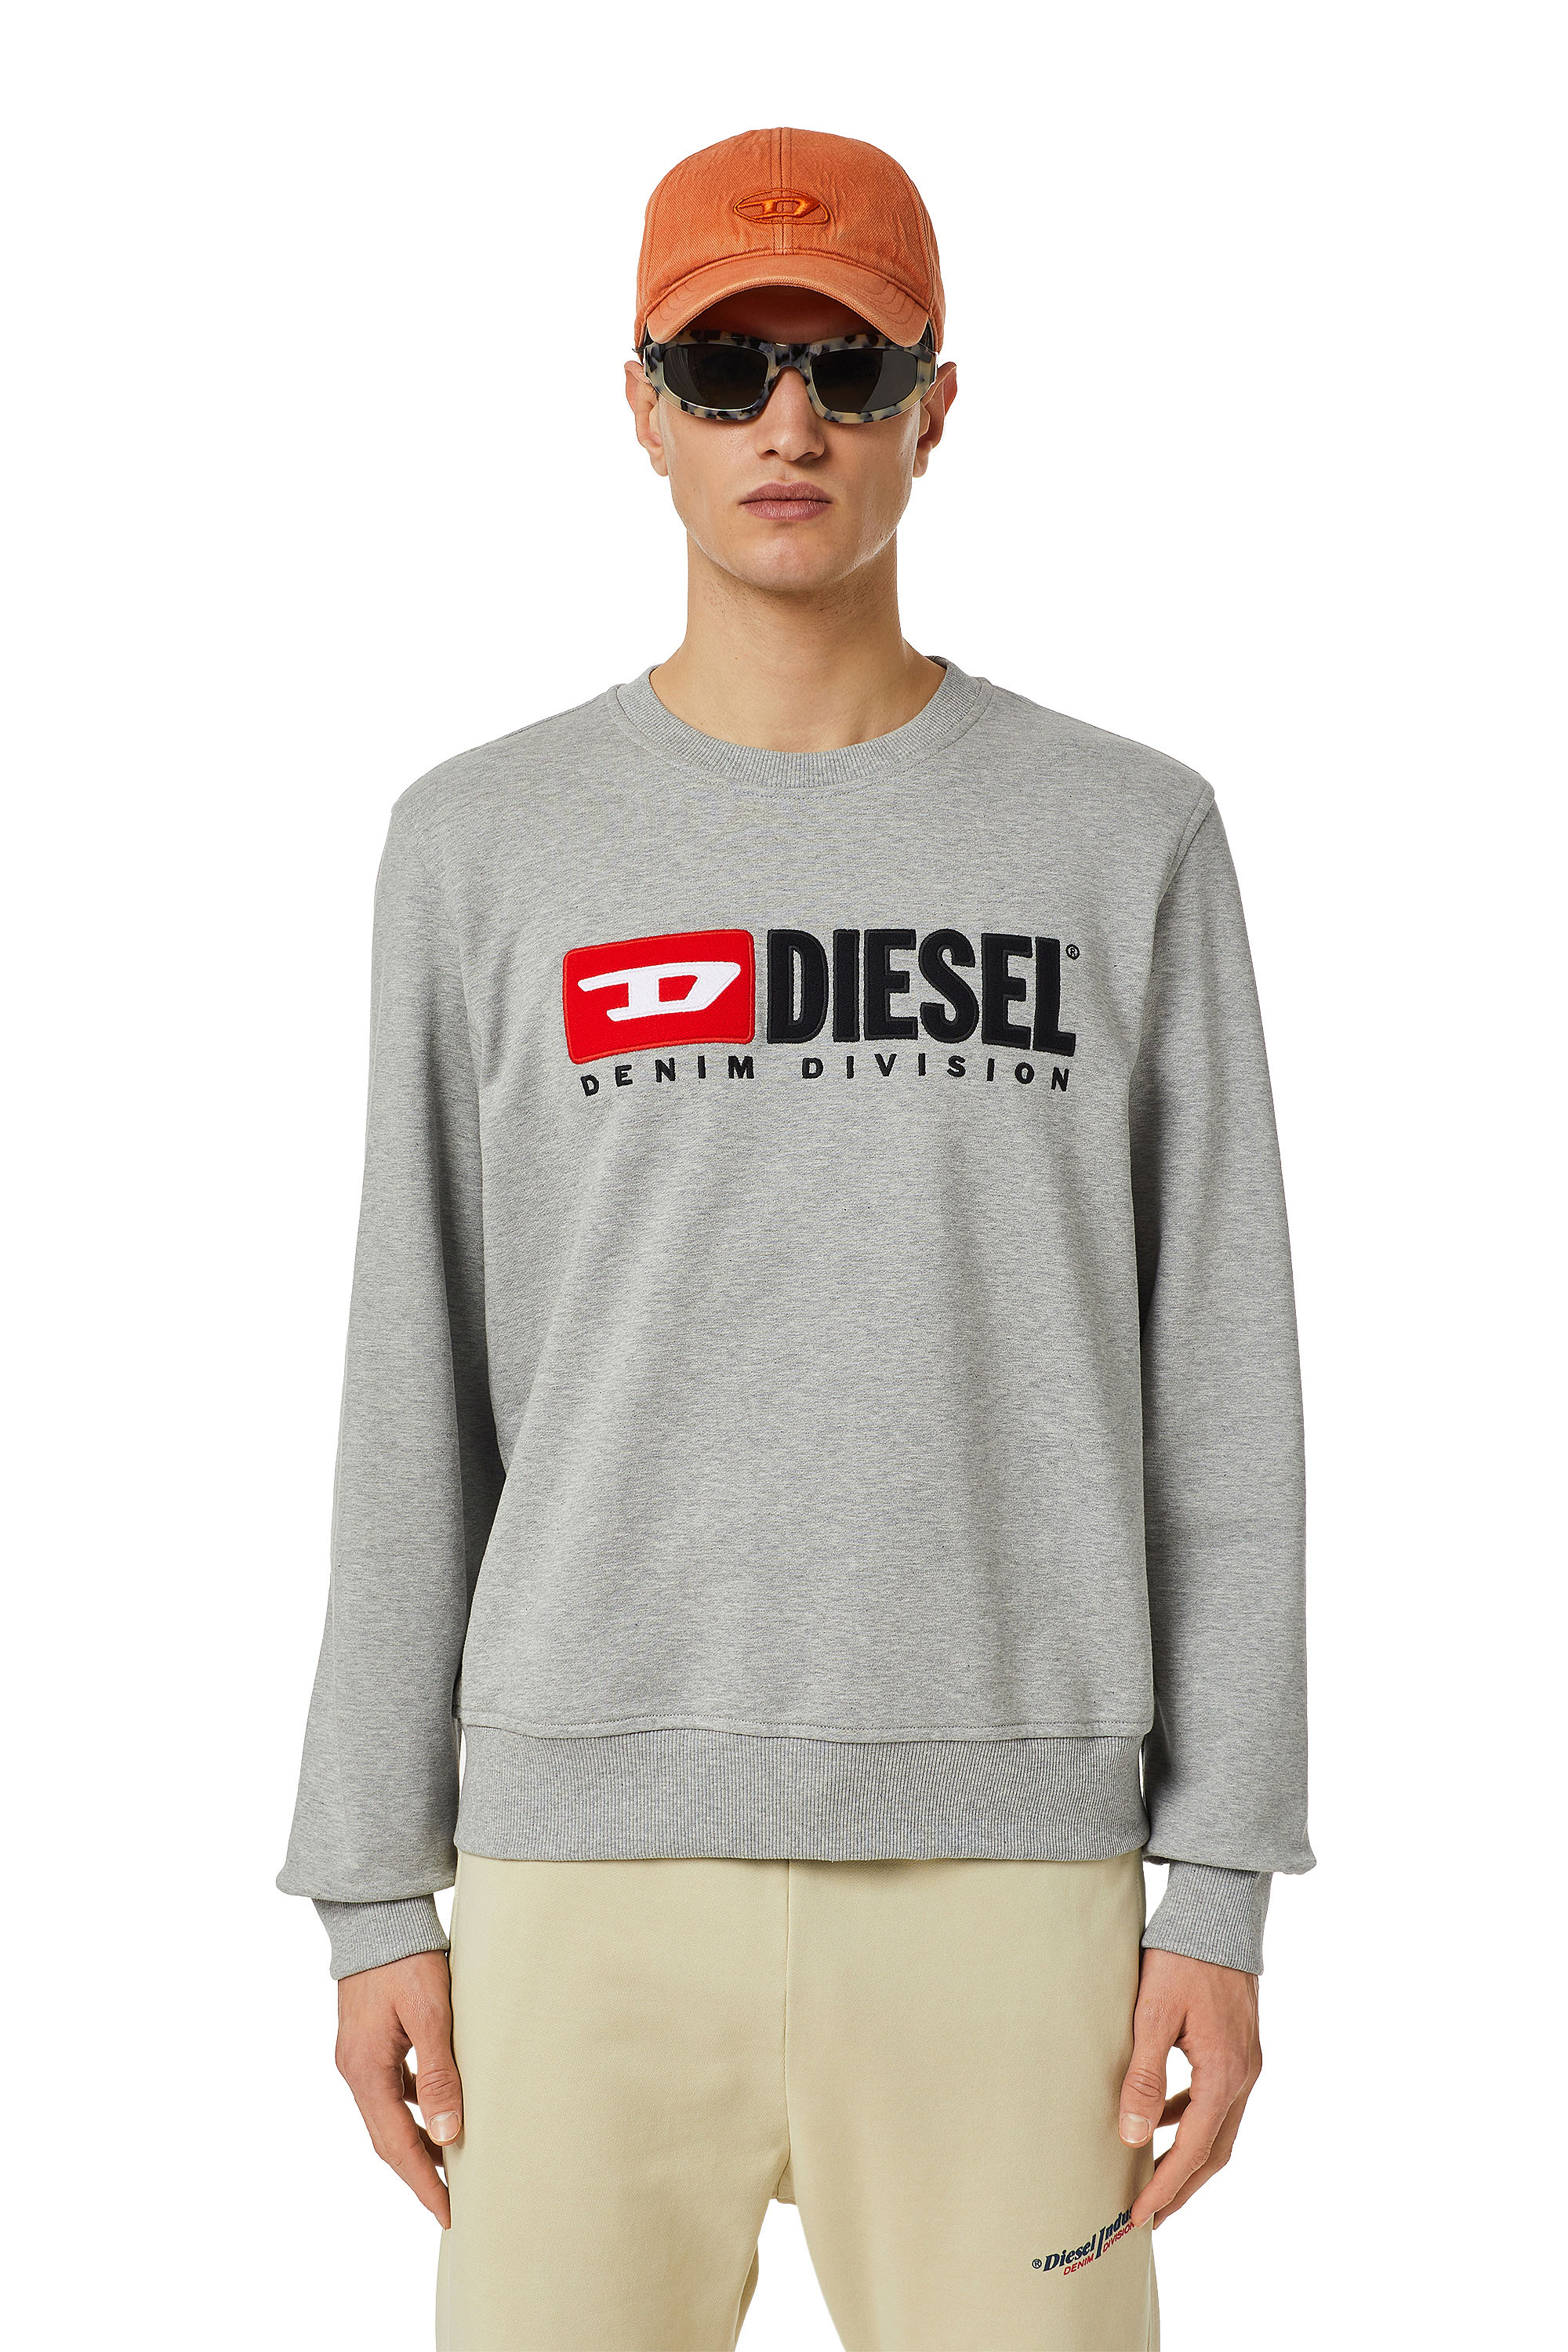 Diesel Denim Division Sweatshirt In Grigio